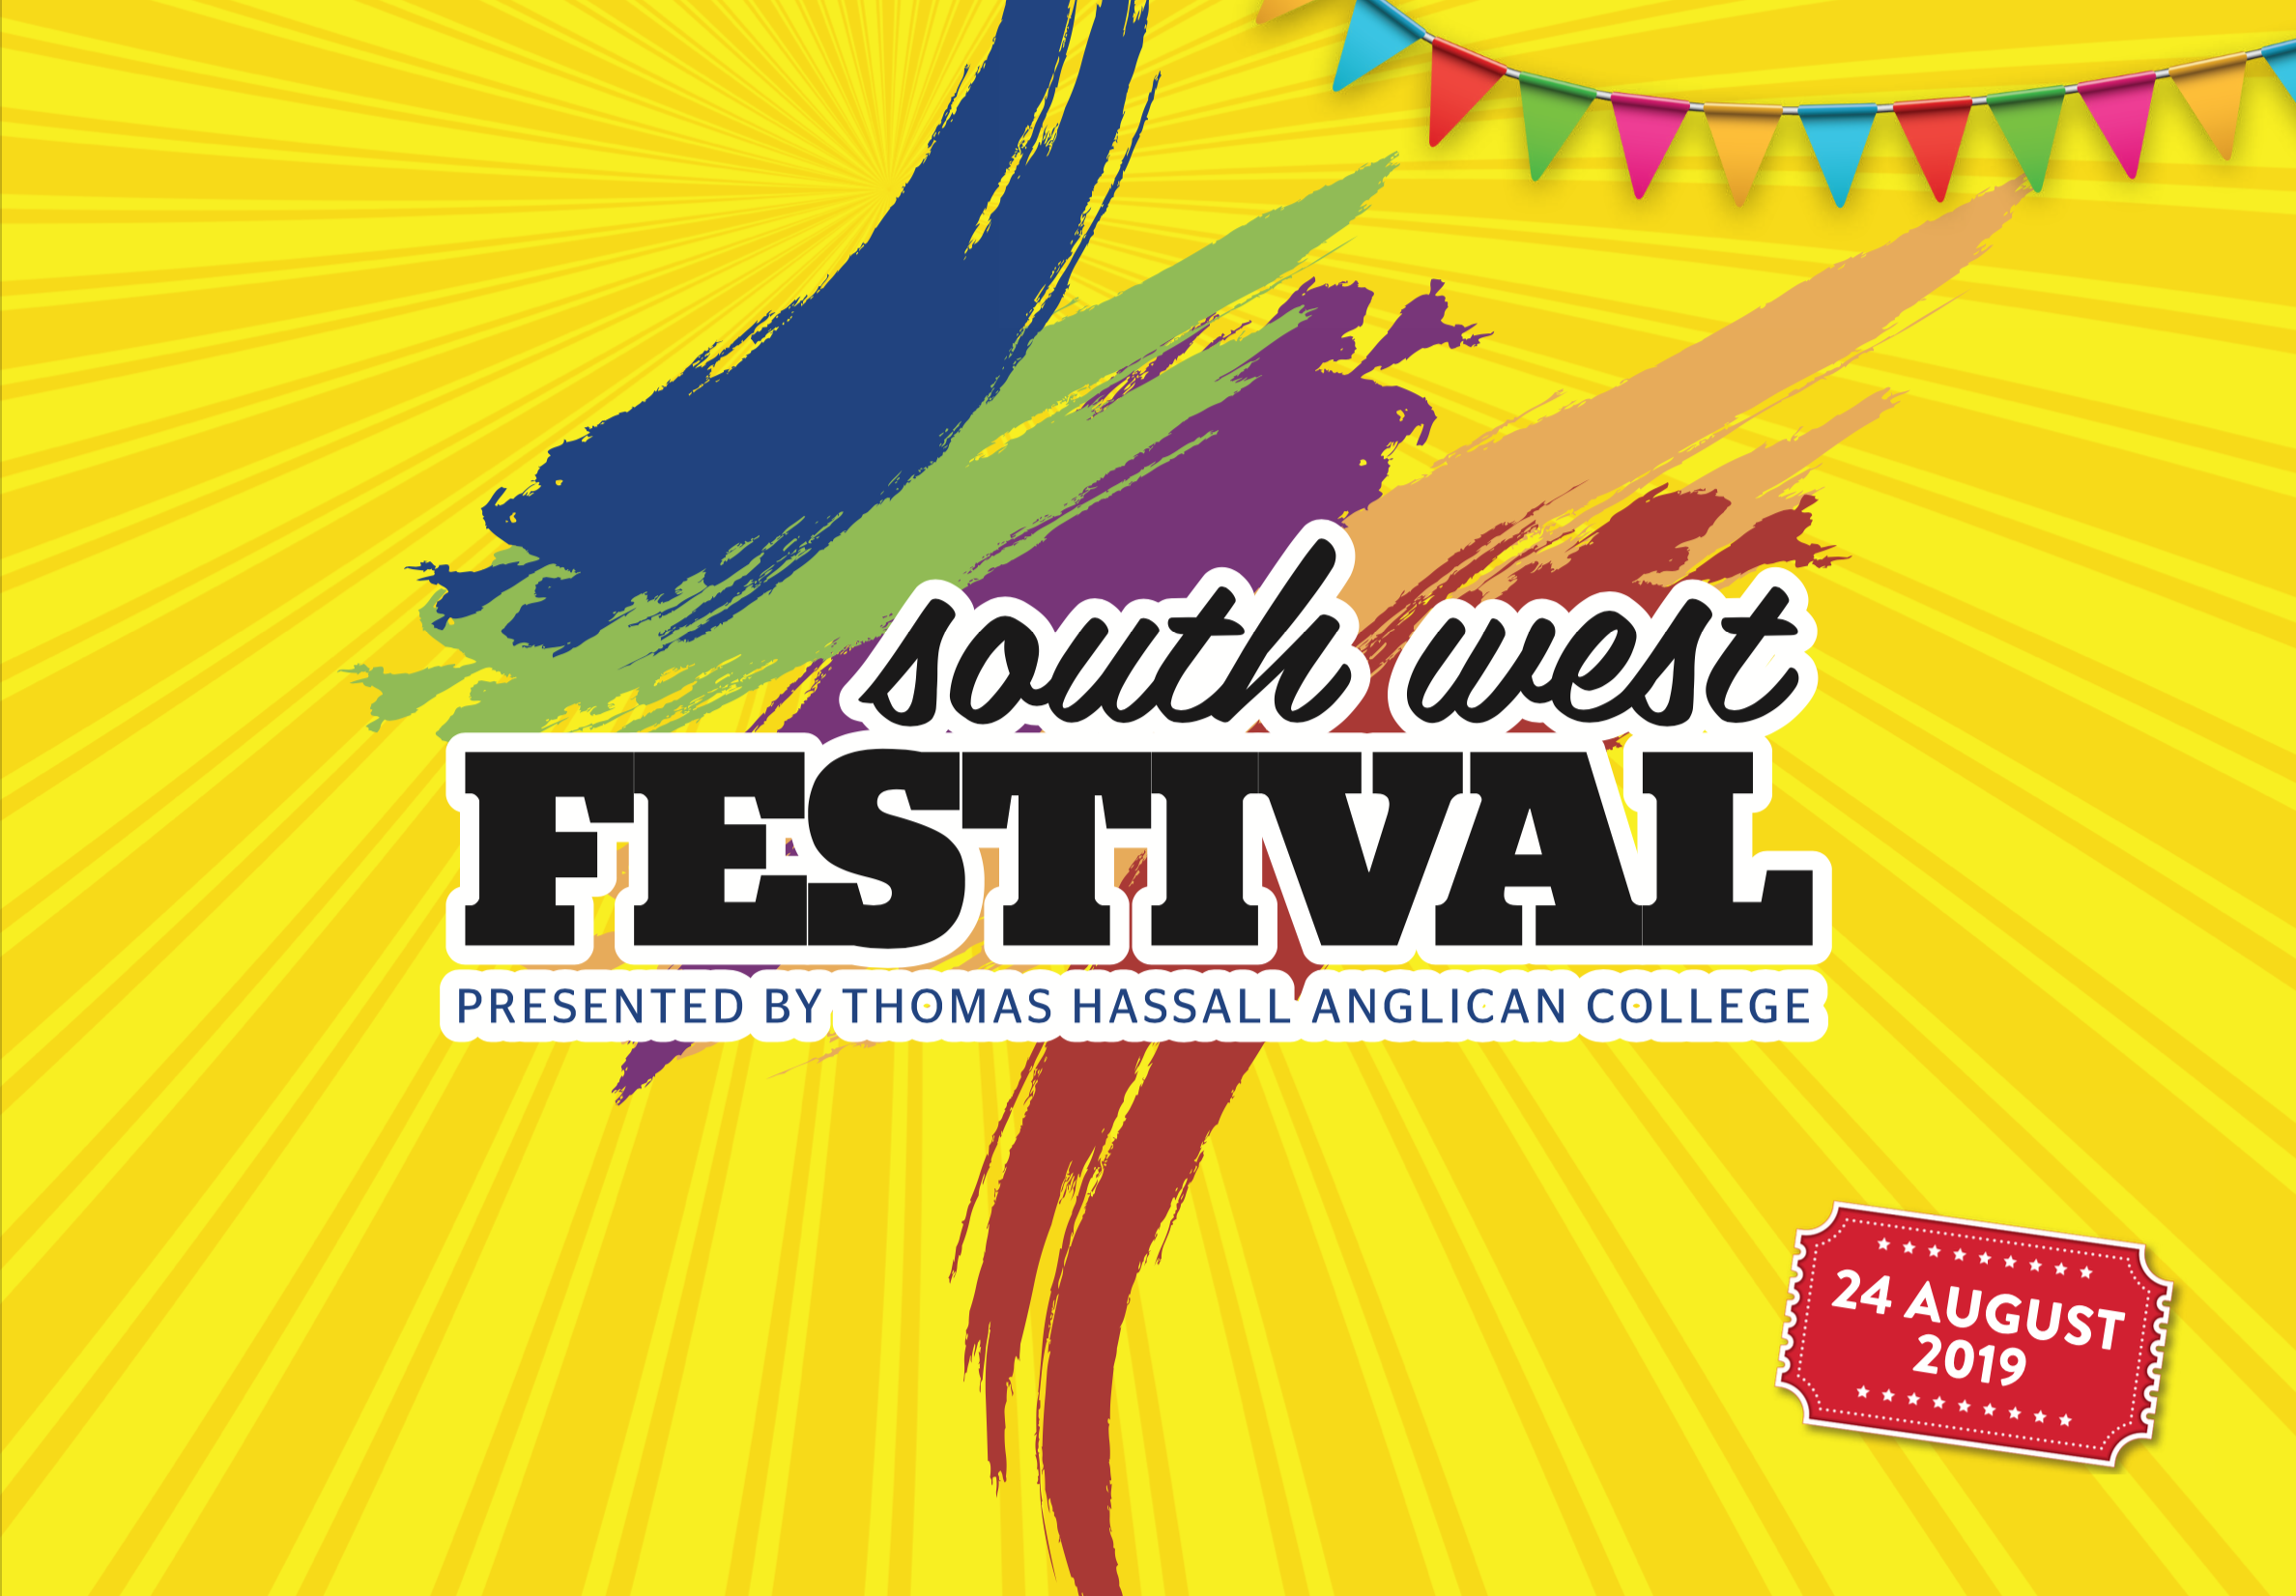 South West Festival 2019